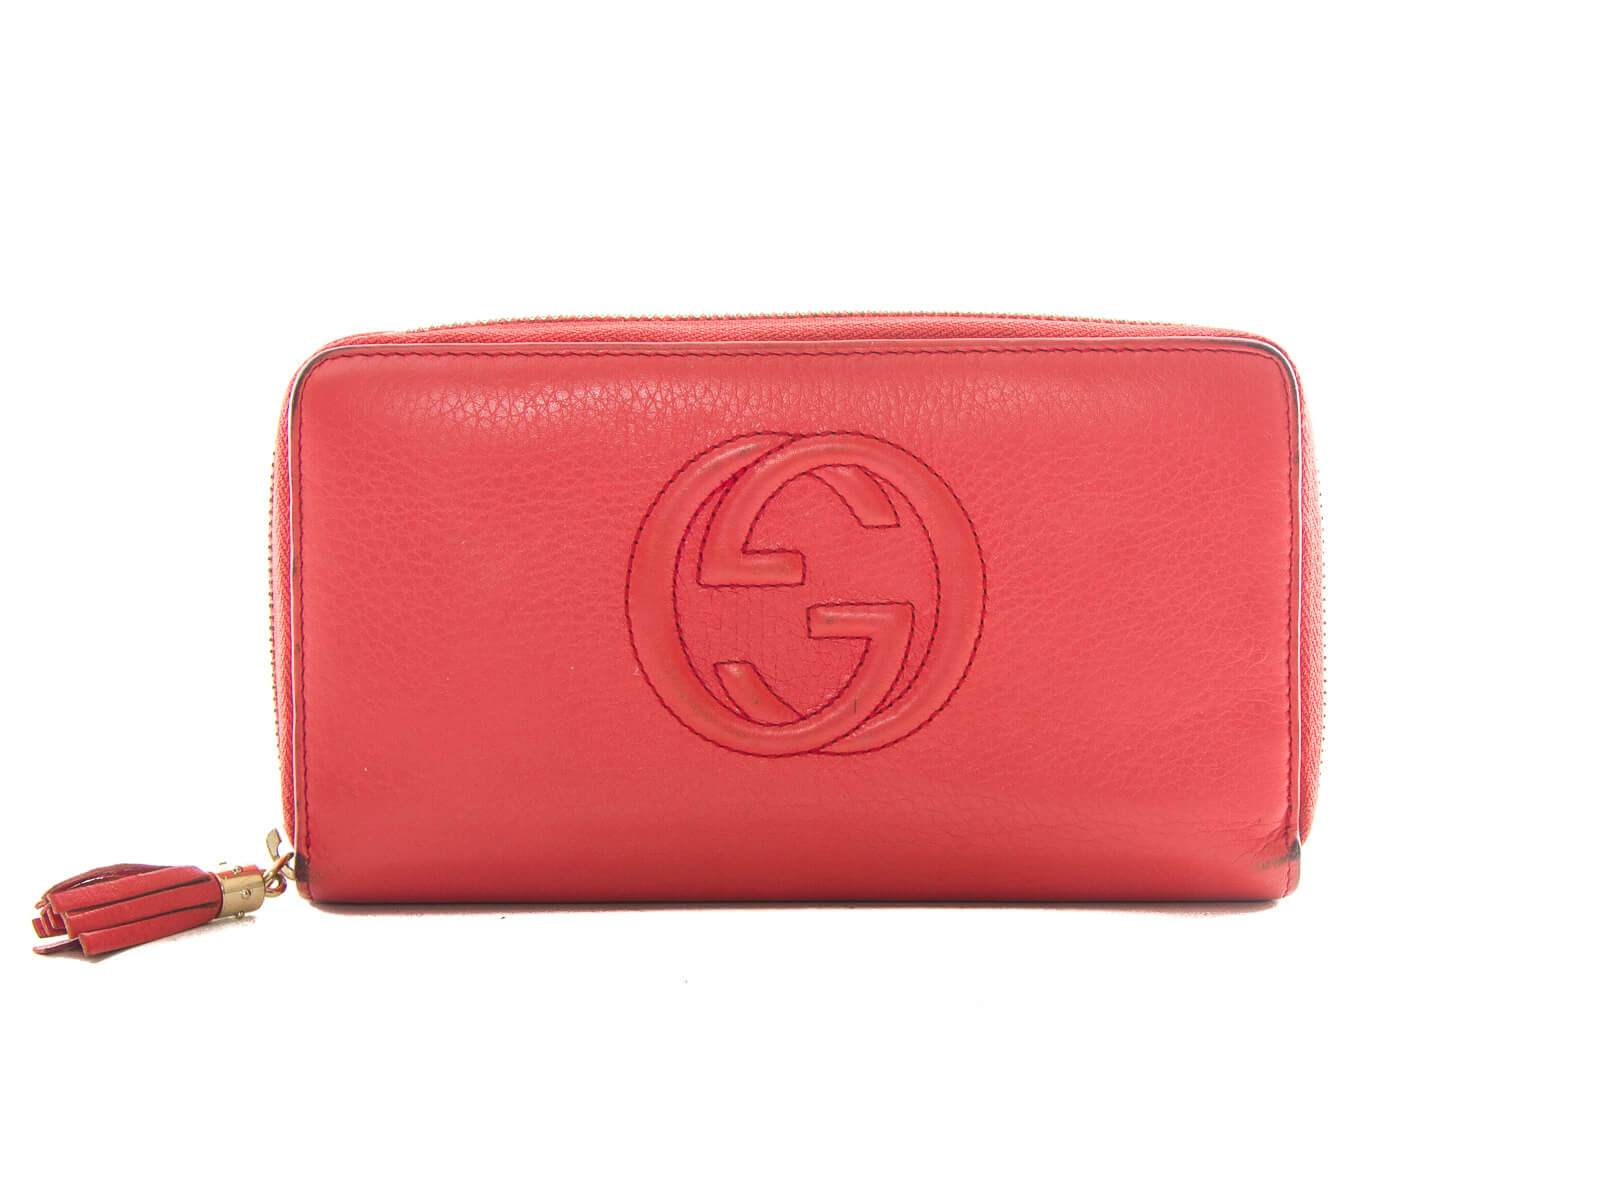 Authentic Gucci Logo - Authentic Gucci GG logo Soho Orange leather zip around wallet ...